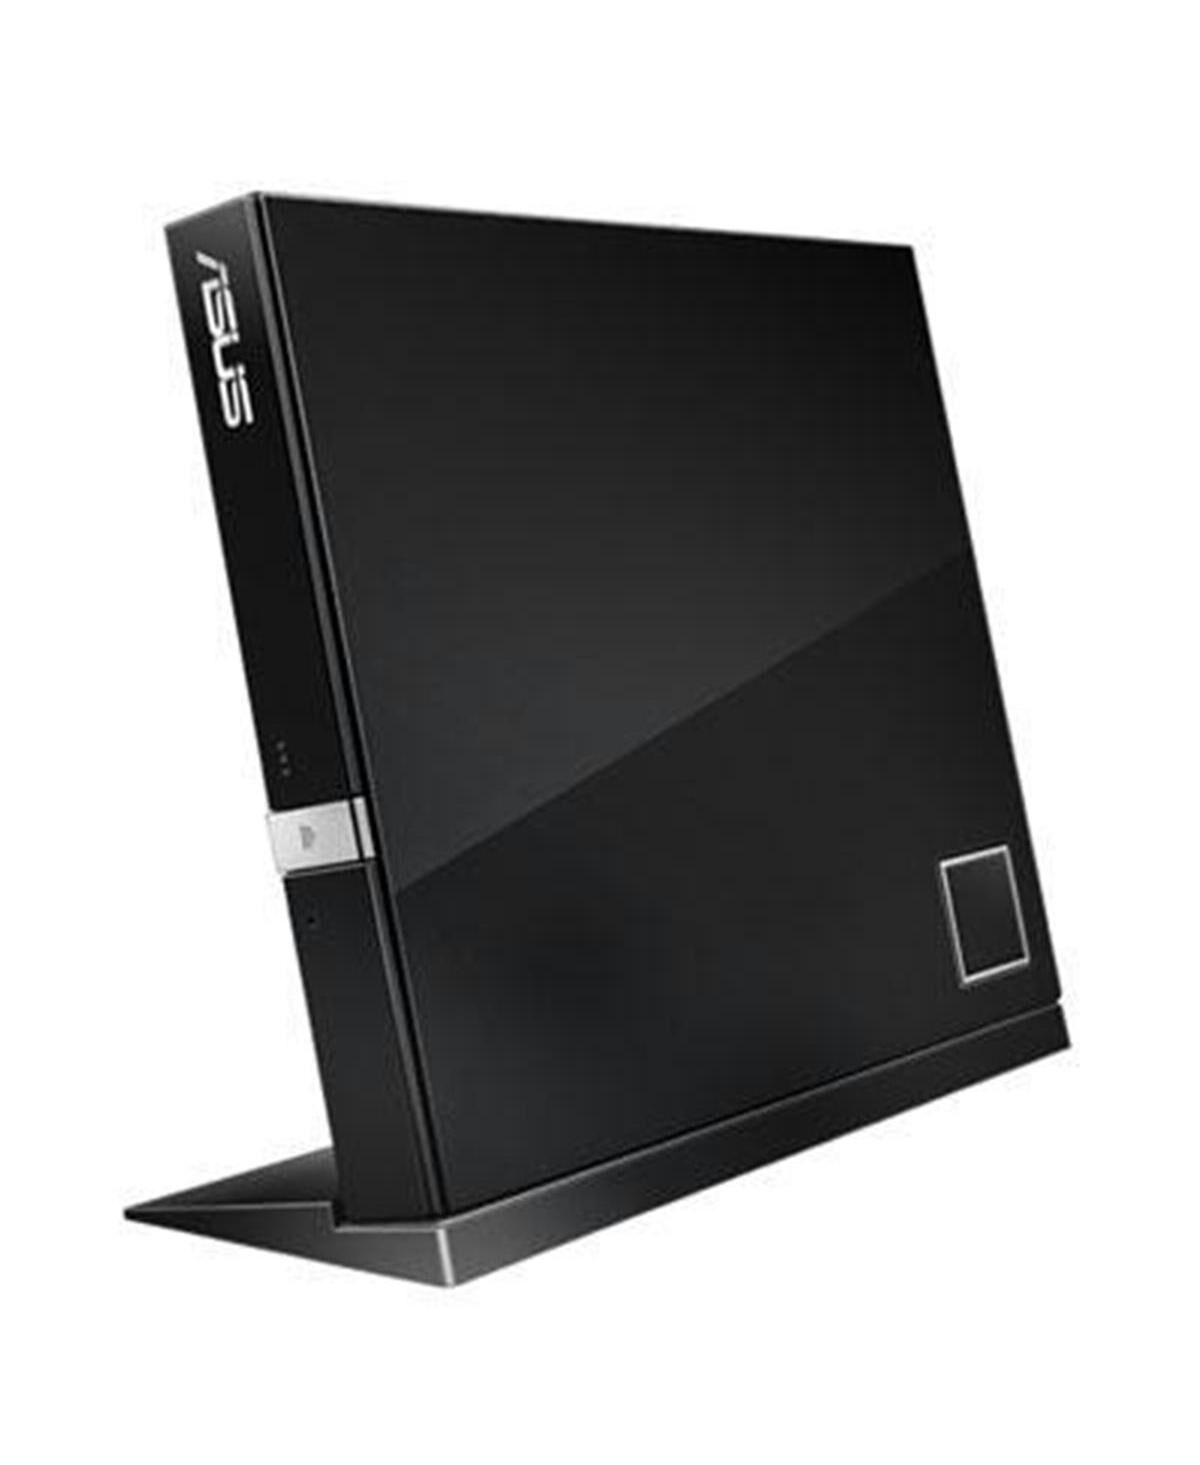 Asus Us Sbw-06D2X-u-blk-g-as External Slim Blu-Ray Disc R-w - Black